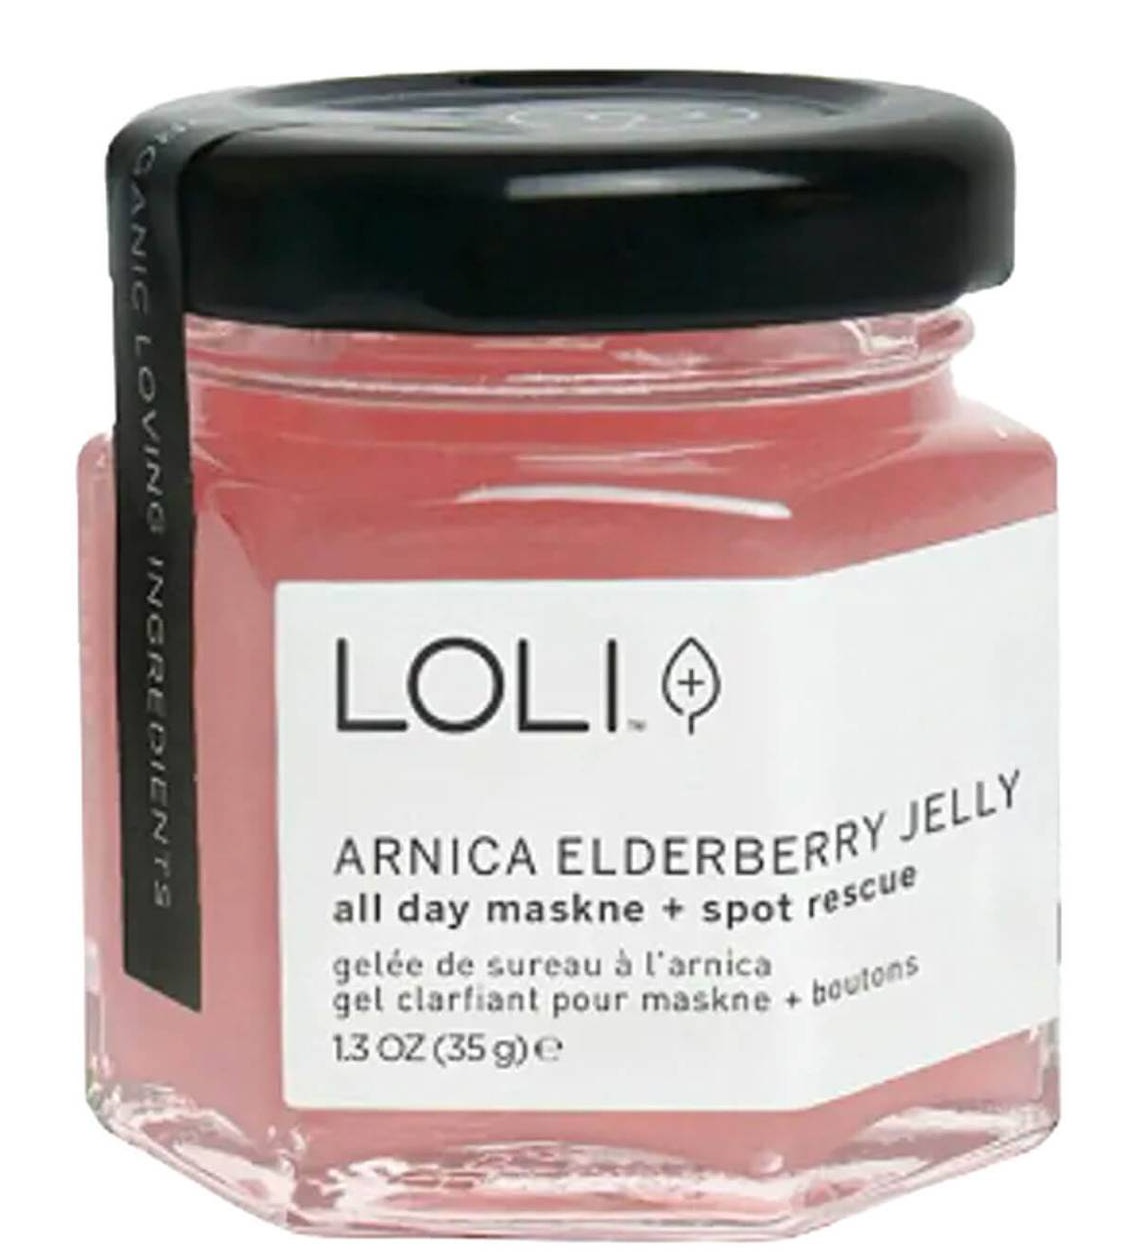 LOLI Arnica Elderberry Jelly